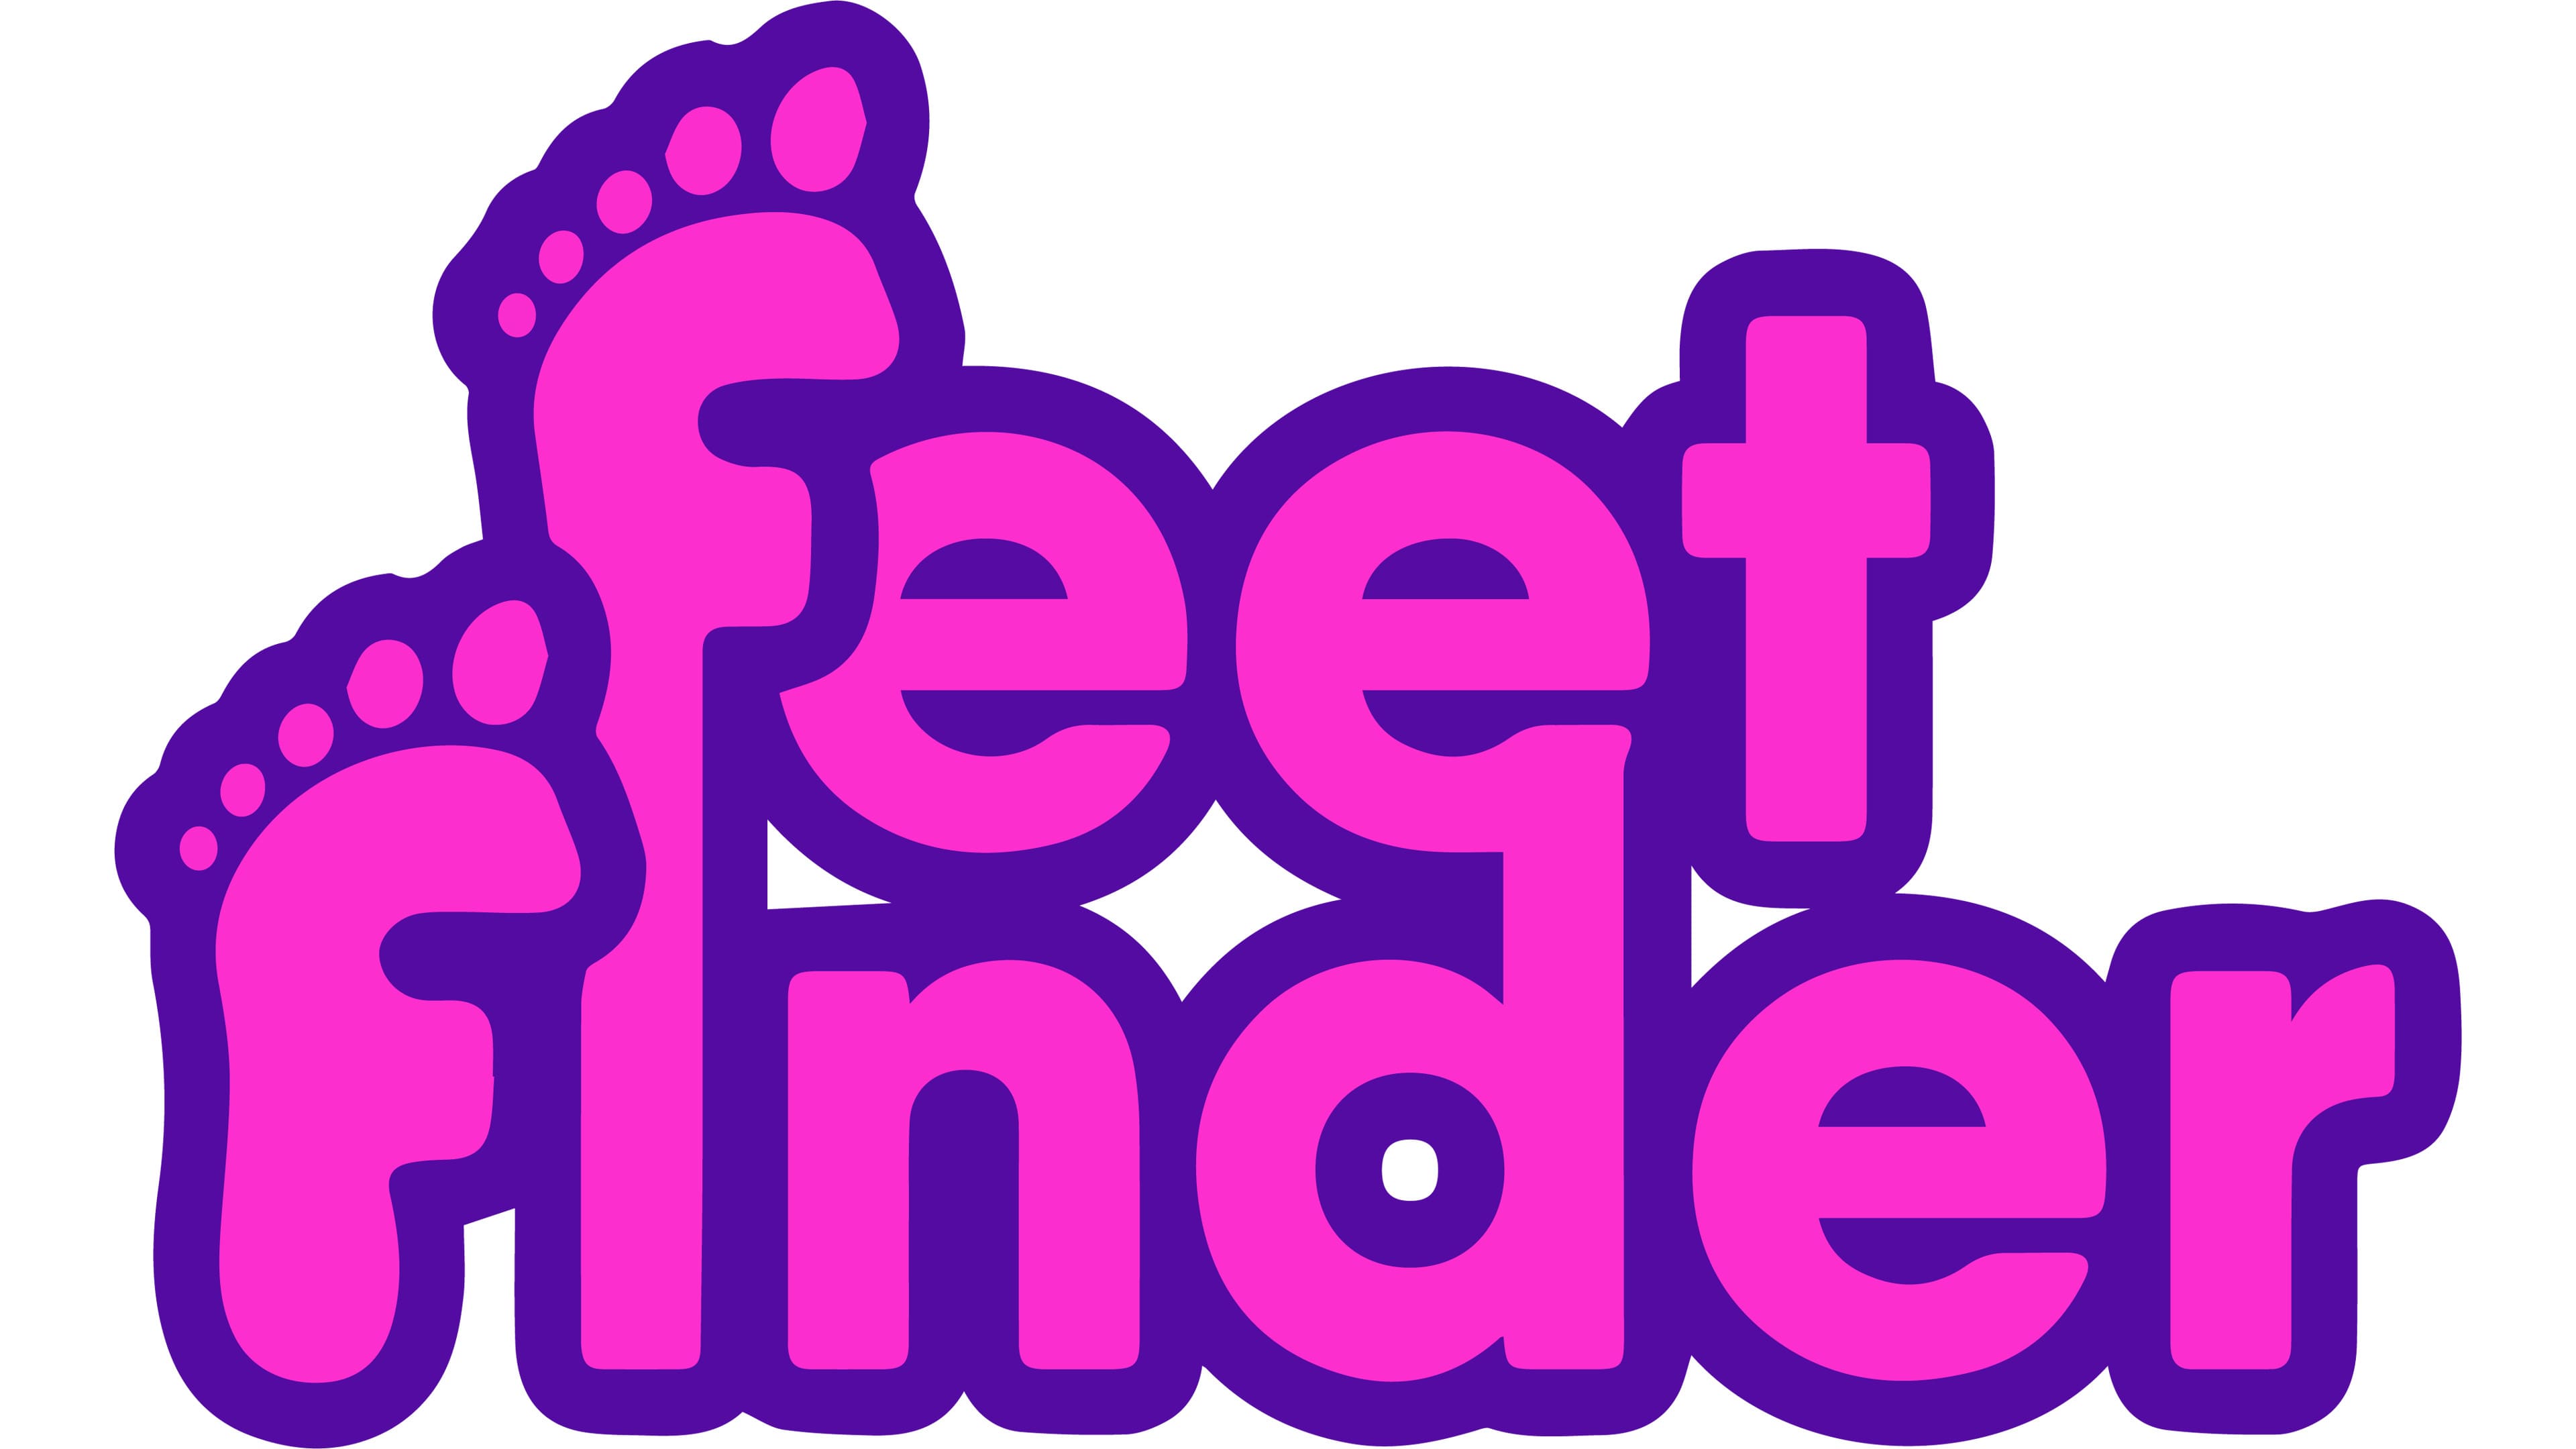 FeetFinder Logo